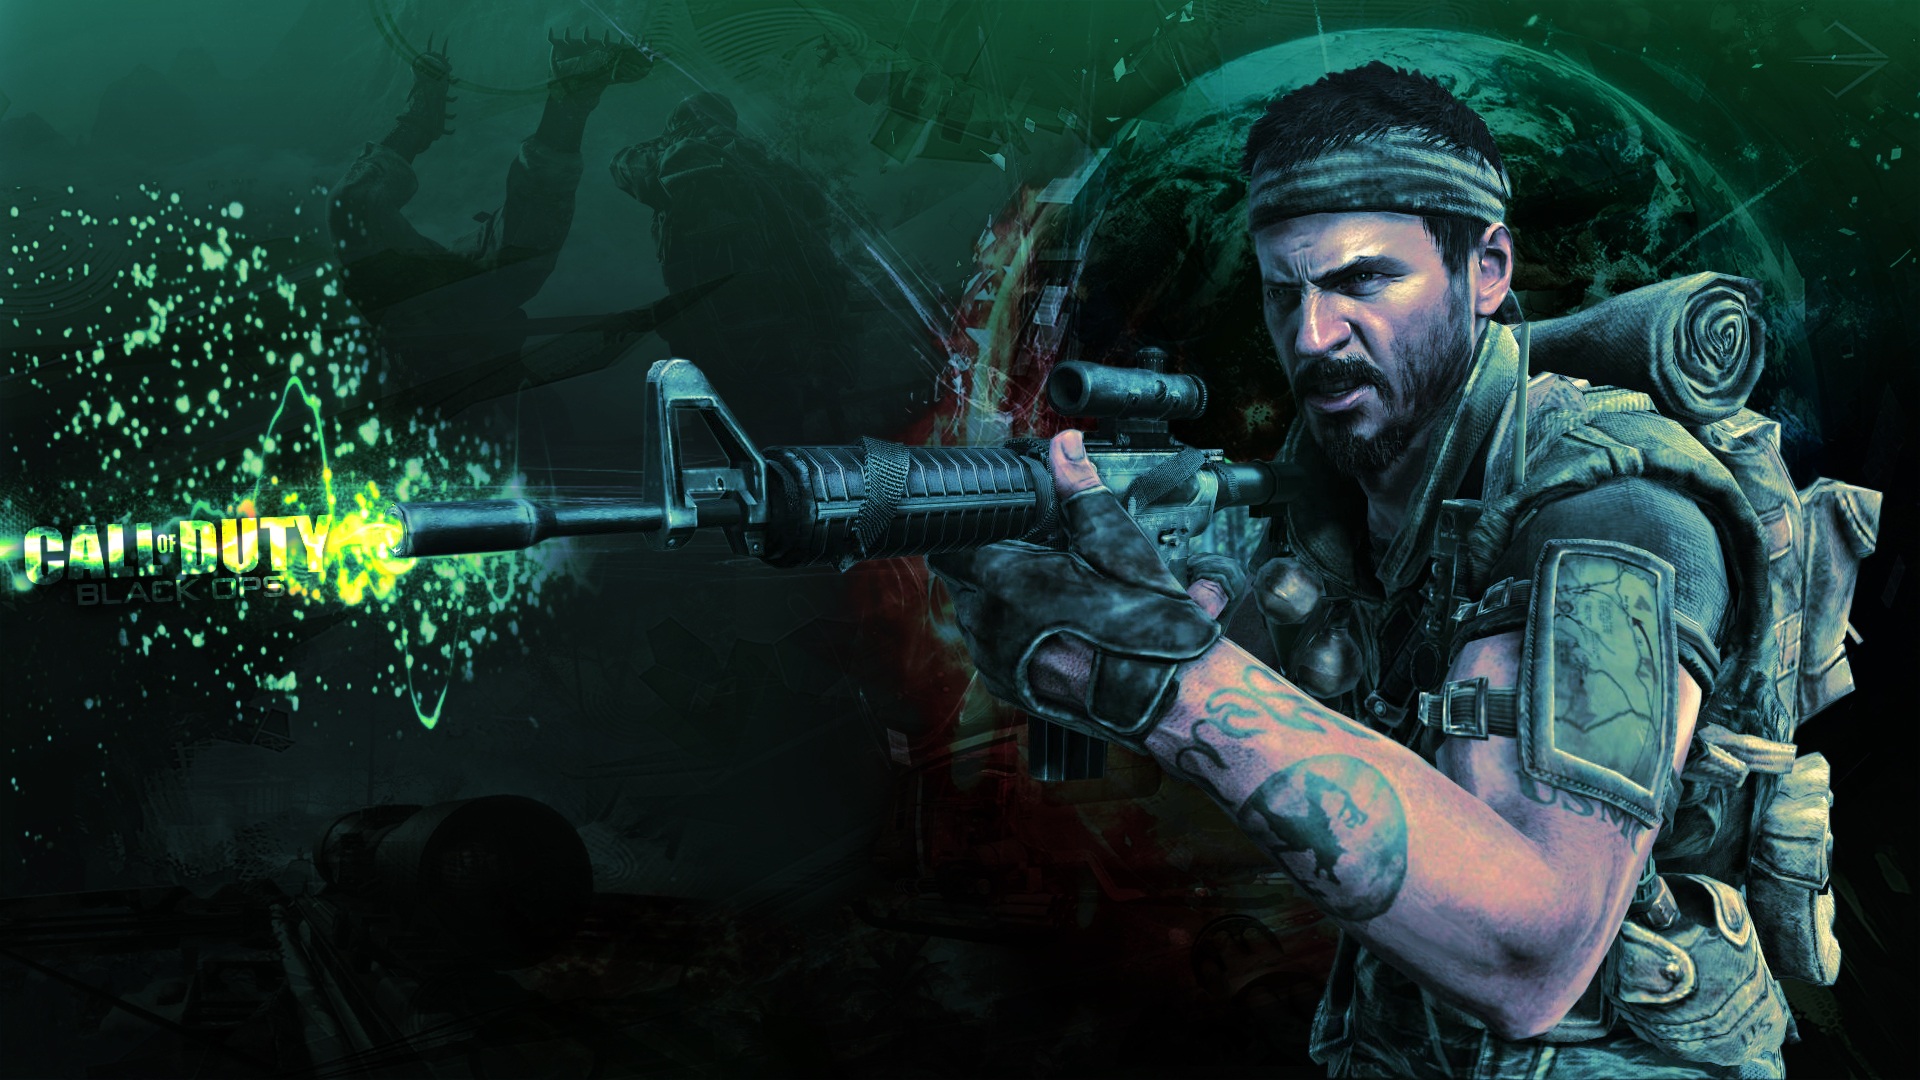  Duty Black Ops 1080p Wallpaper Call of Duty Black Ops 720p Wallpaper